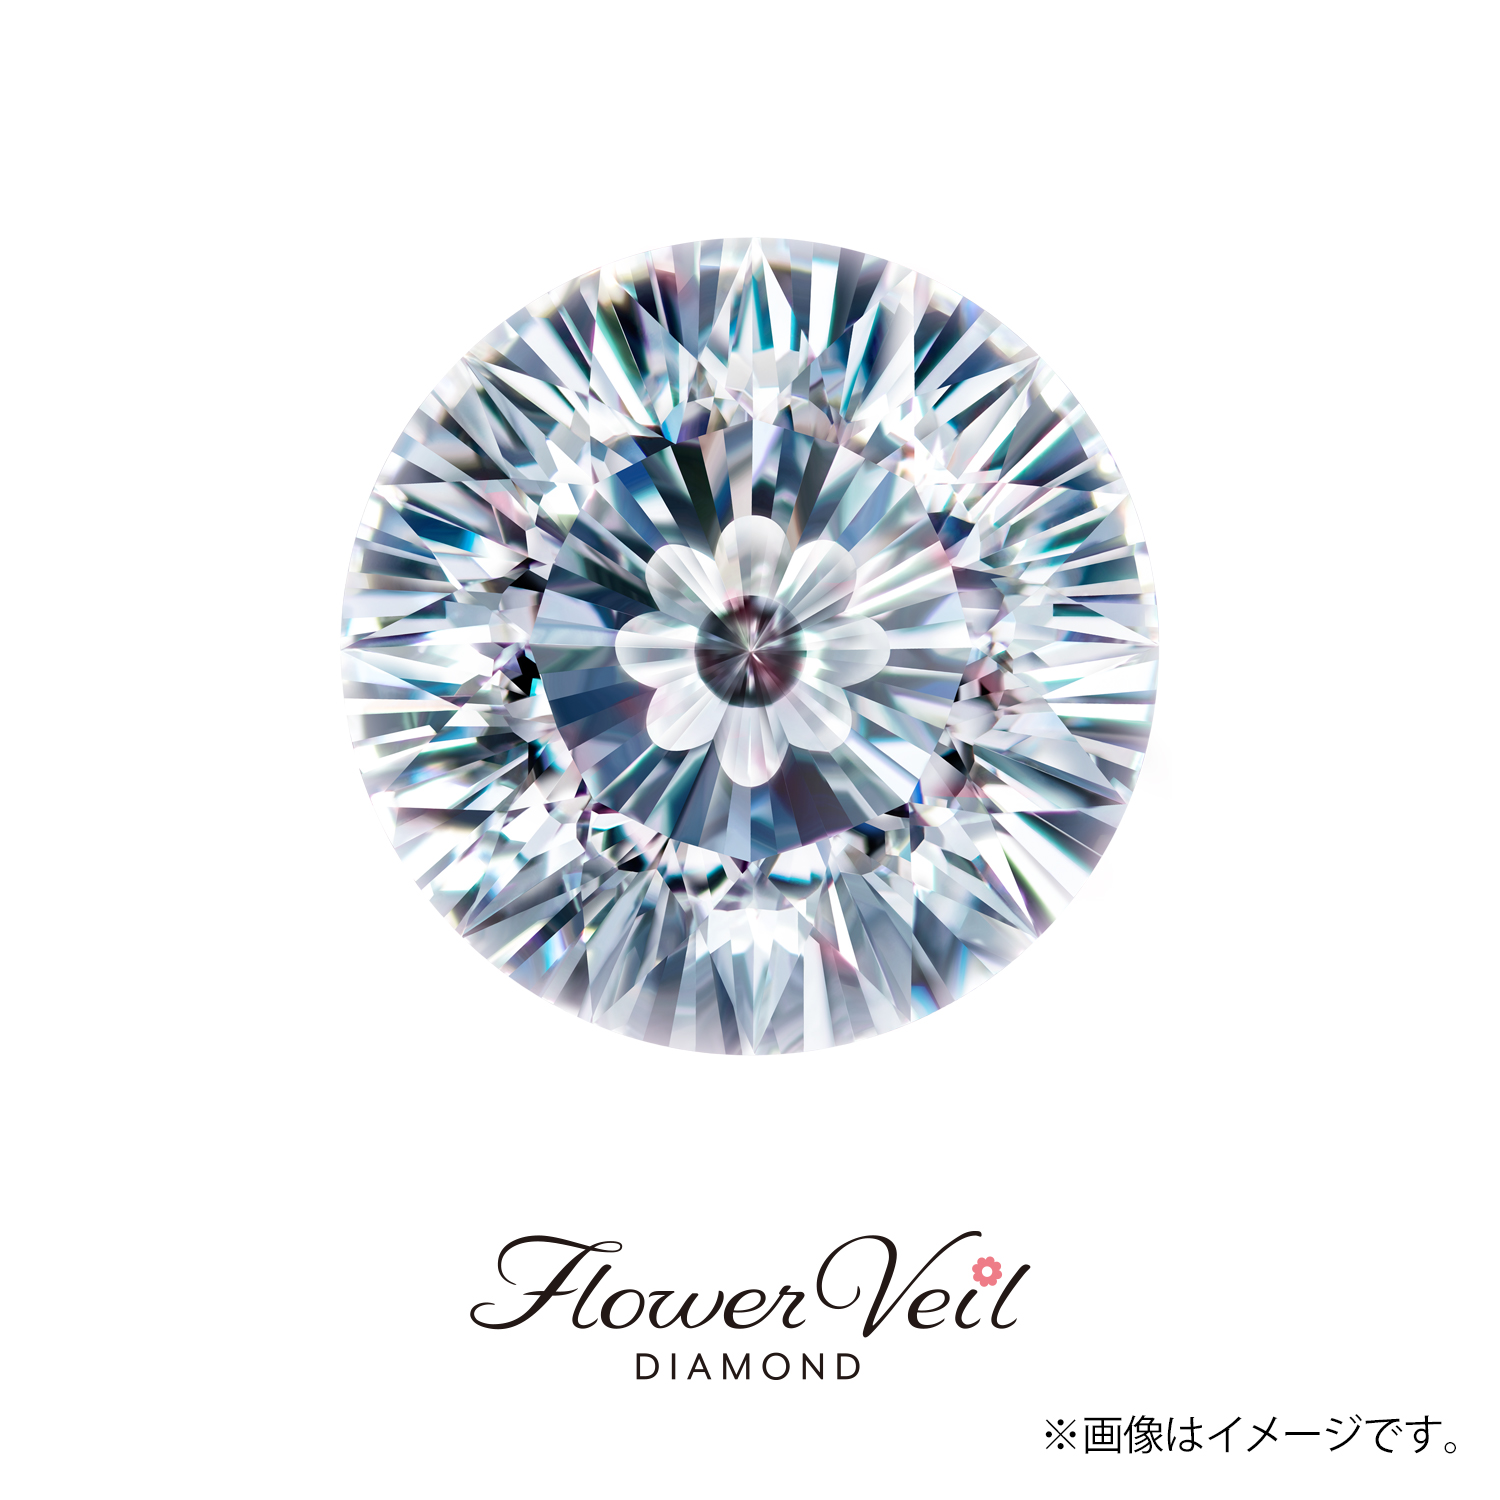 0.520ct Round ダイヤモンド / E / VS1 / FLOWER VEIL CUT